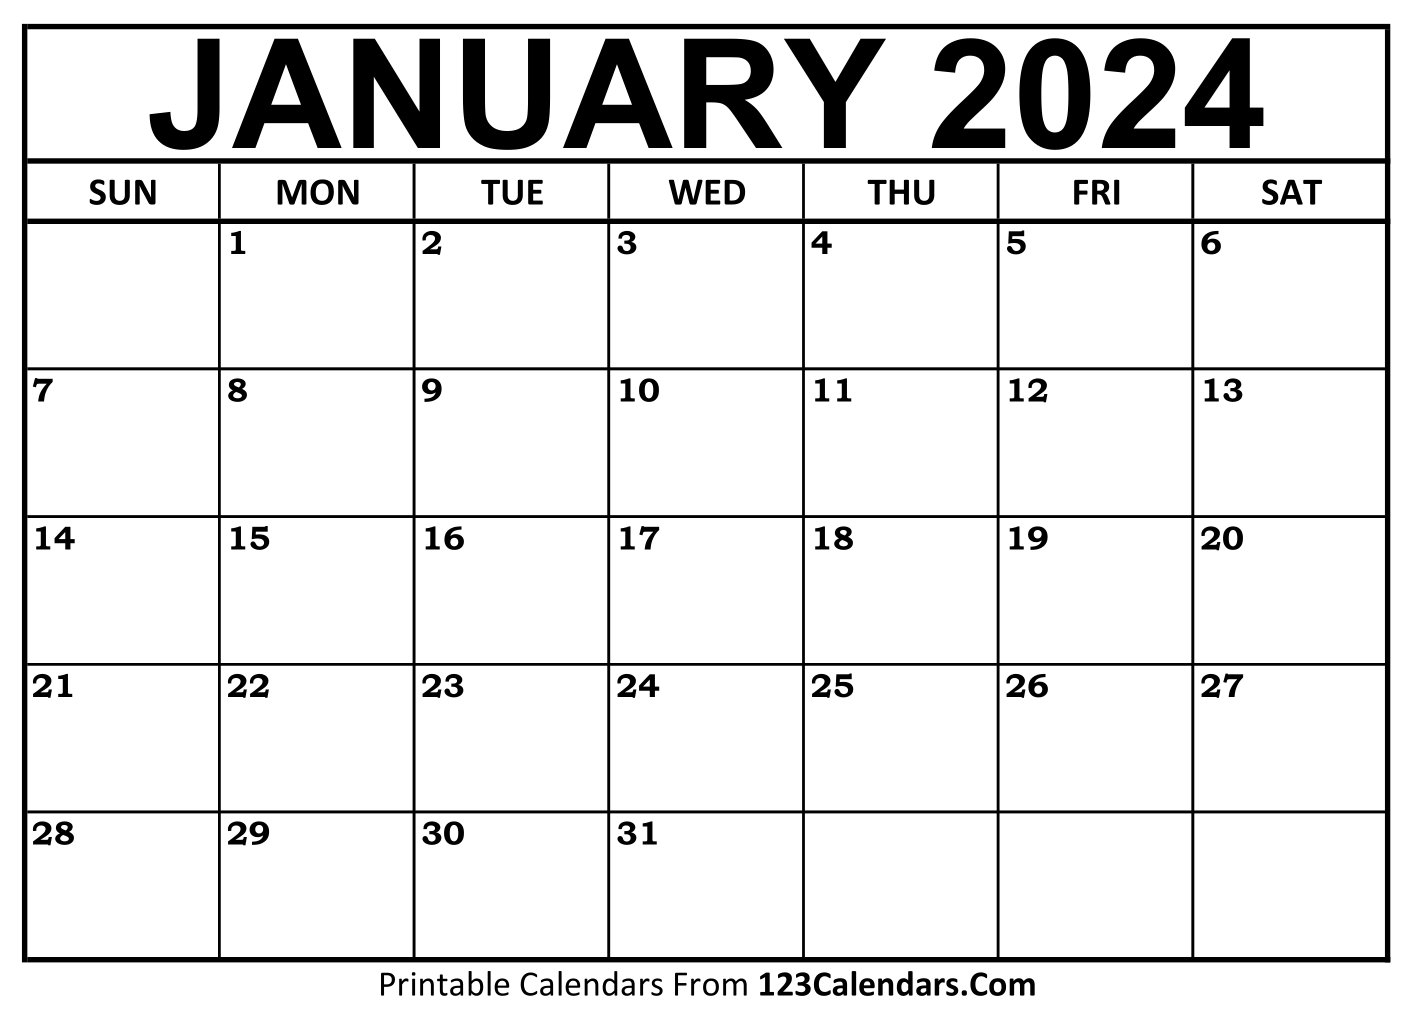 Printable January 2024 Calendar Templates - 123Calendars for Free Printable Blank January 2024 Calendar